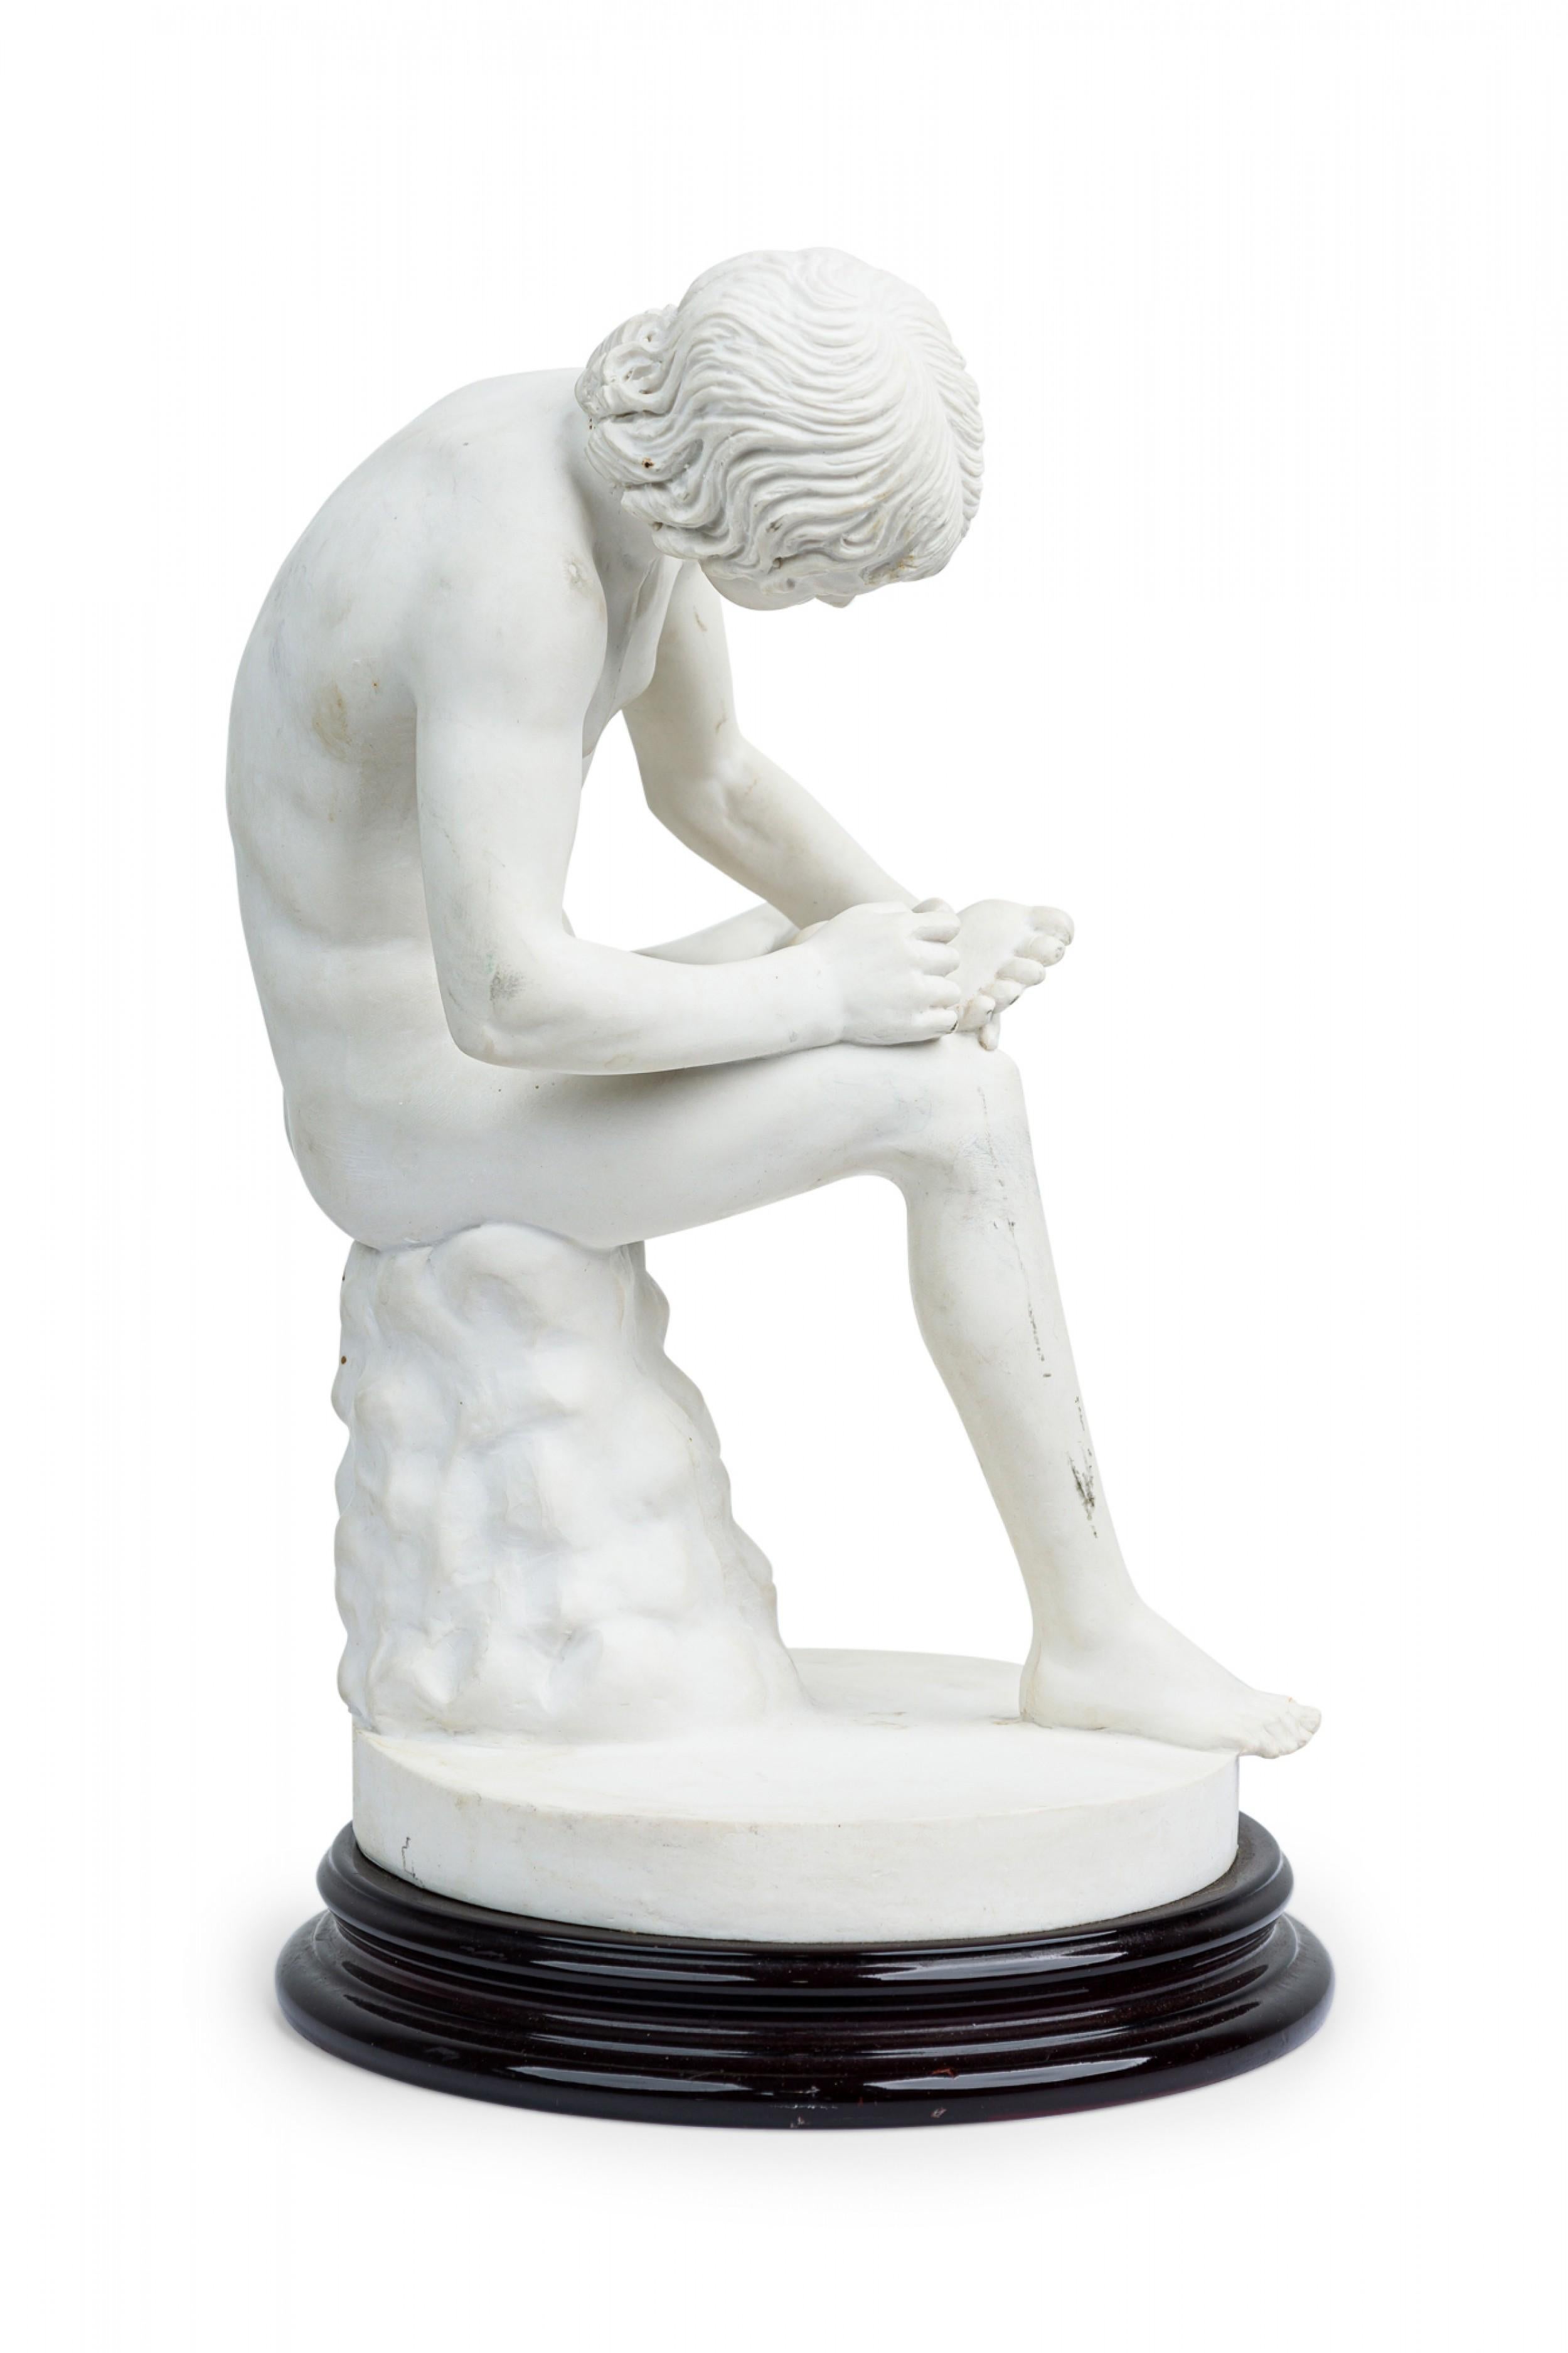 20th Century Italian White Porcelain Small Statue Cast of 